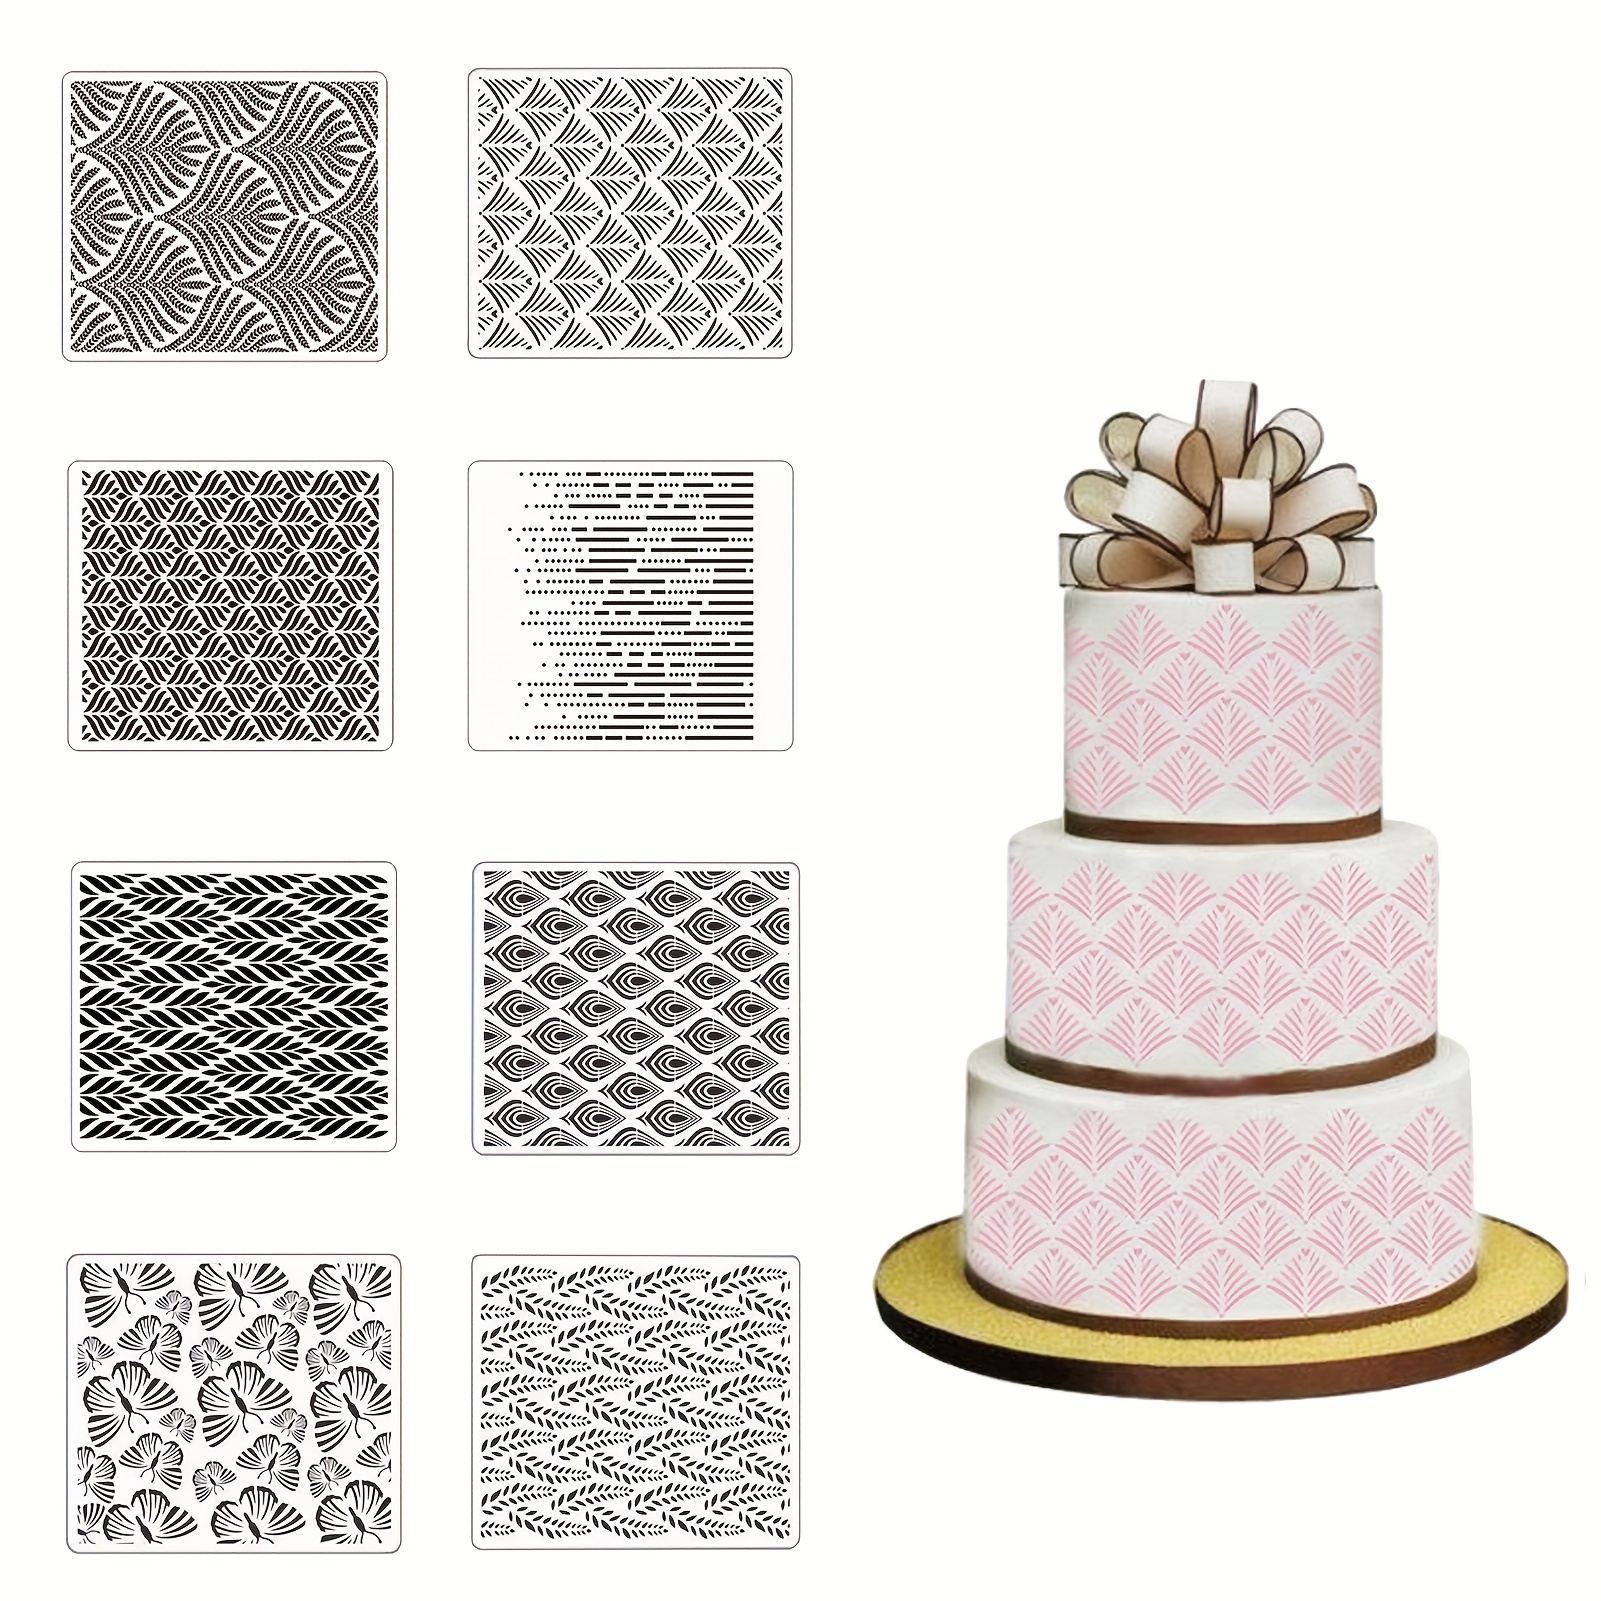  WYD 4-Pack Plastic Cake Decorating Stencil Molds Wedding  Brithday Cake Stencils Fondant Stencil Baking Tools Dessert Decorating  Molds(54005) : Home & Kitchen